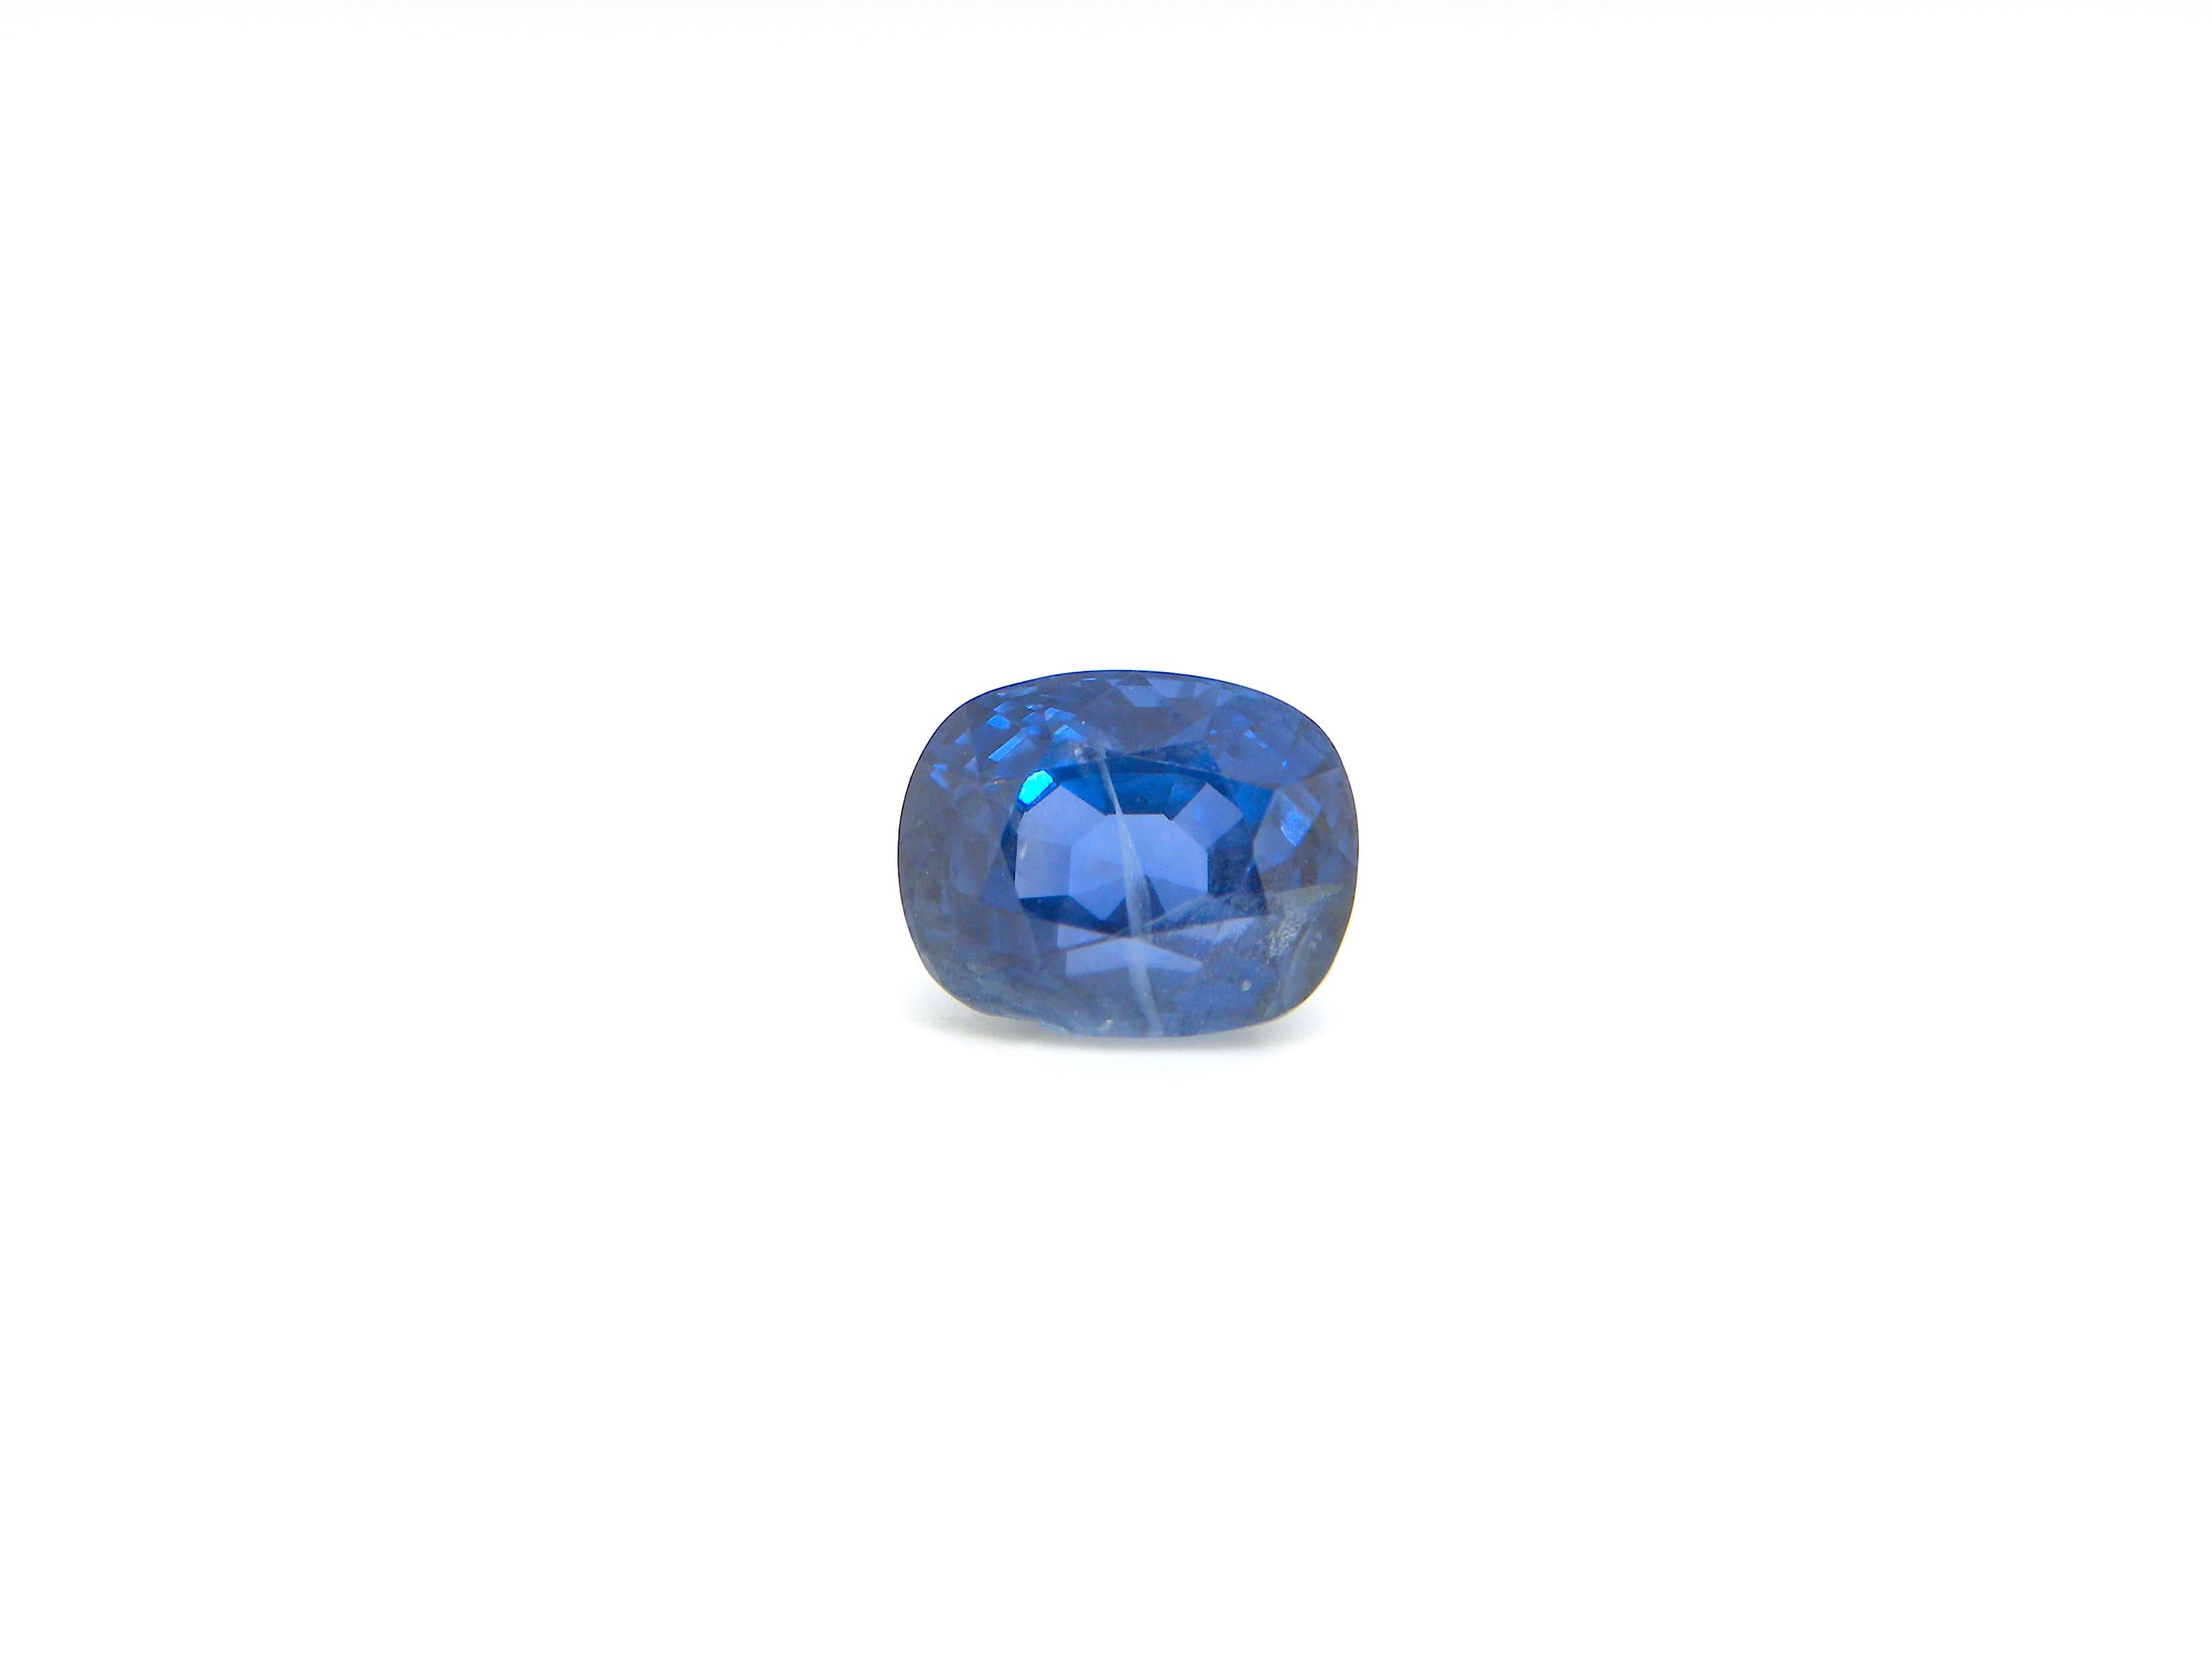 3.75 Carat GIA Certified Burma No Heat Cushion Cut Vivid Blue Sapphire:

A beautiful gem, it is a 3.75 carat GIA certified unheated Burmese sapphire. Hailing from the historic Mogok mines in Burma as certified by GIA Lab, the sapphire possesses a